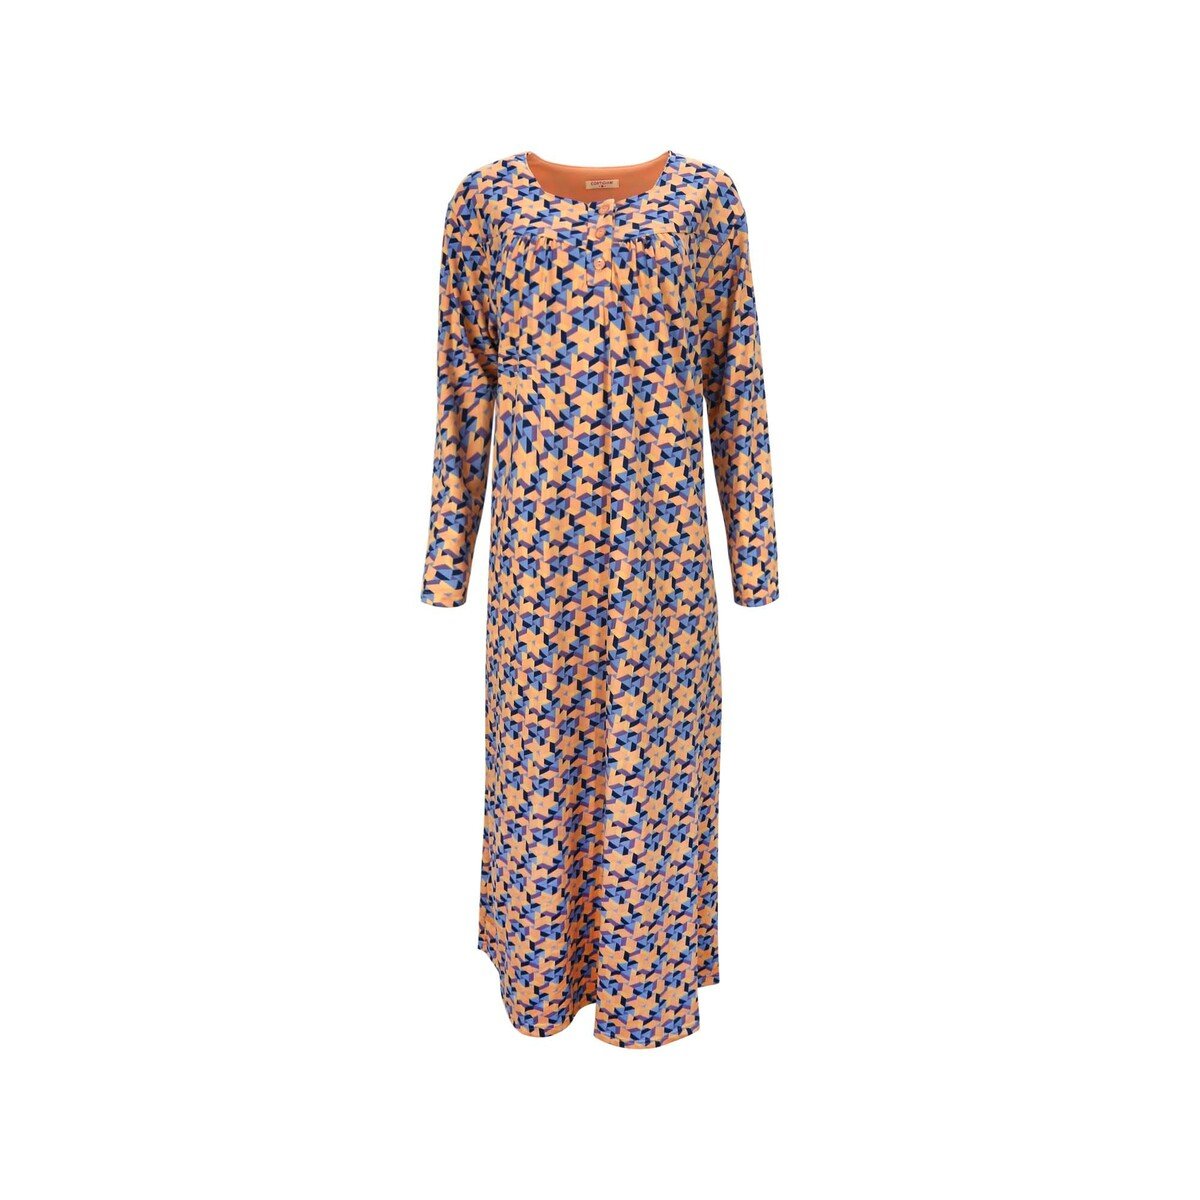 Cortigiani Women's Night Gown Long Sleeve DL-019 Medium